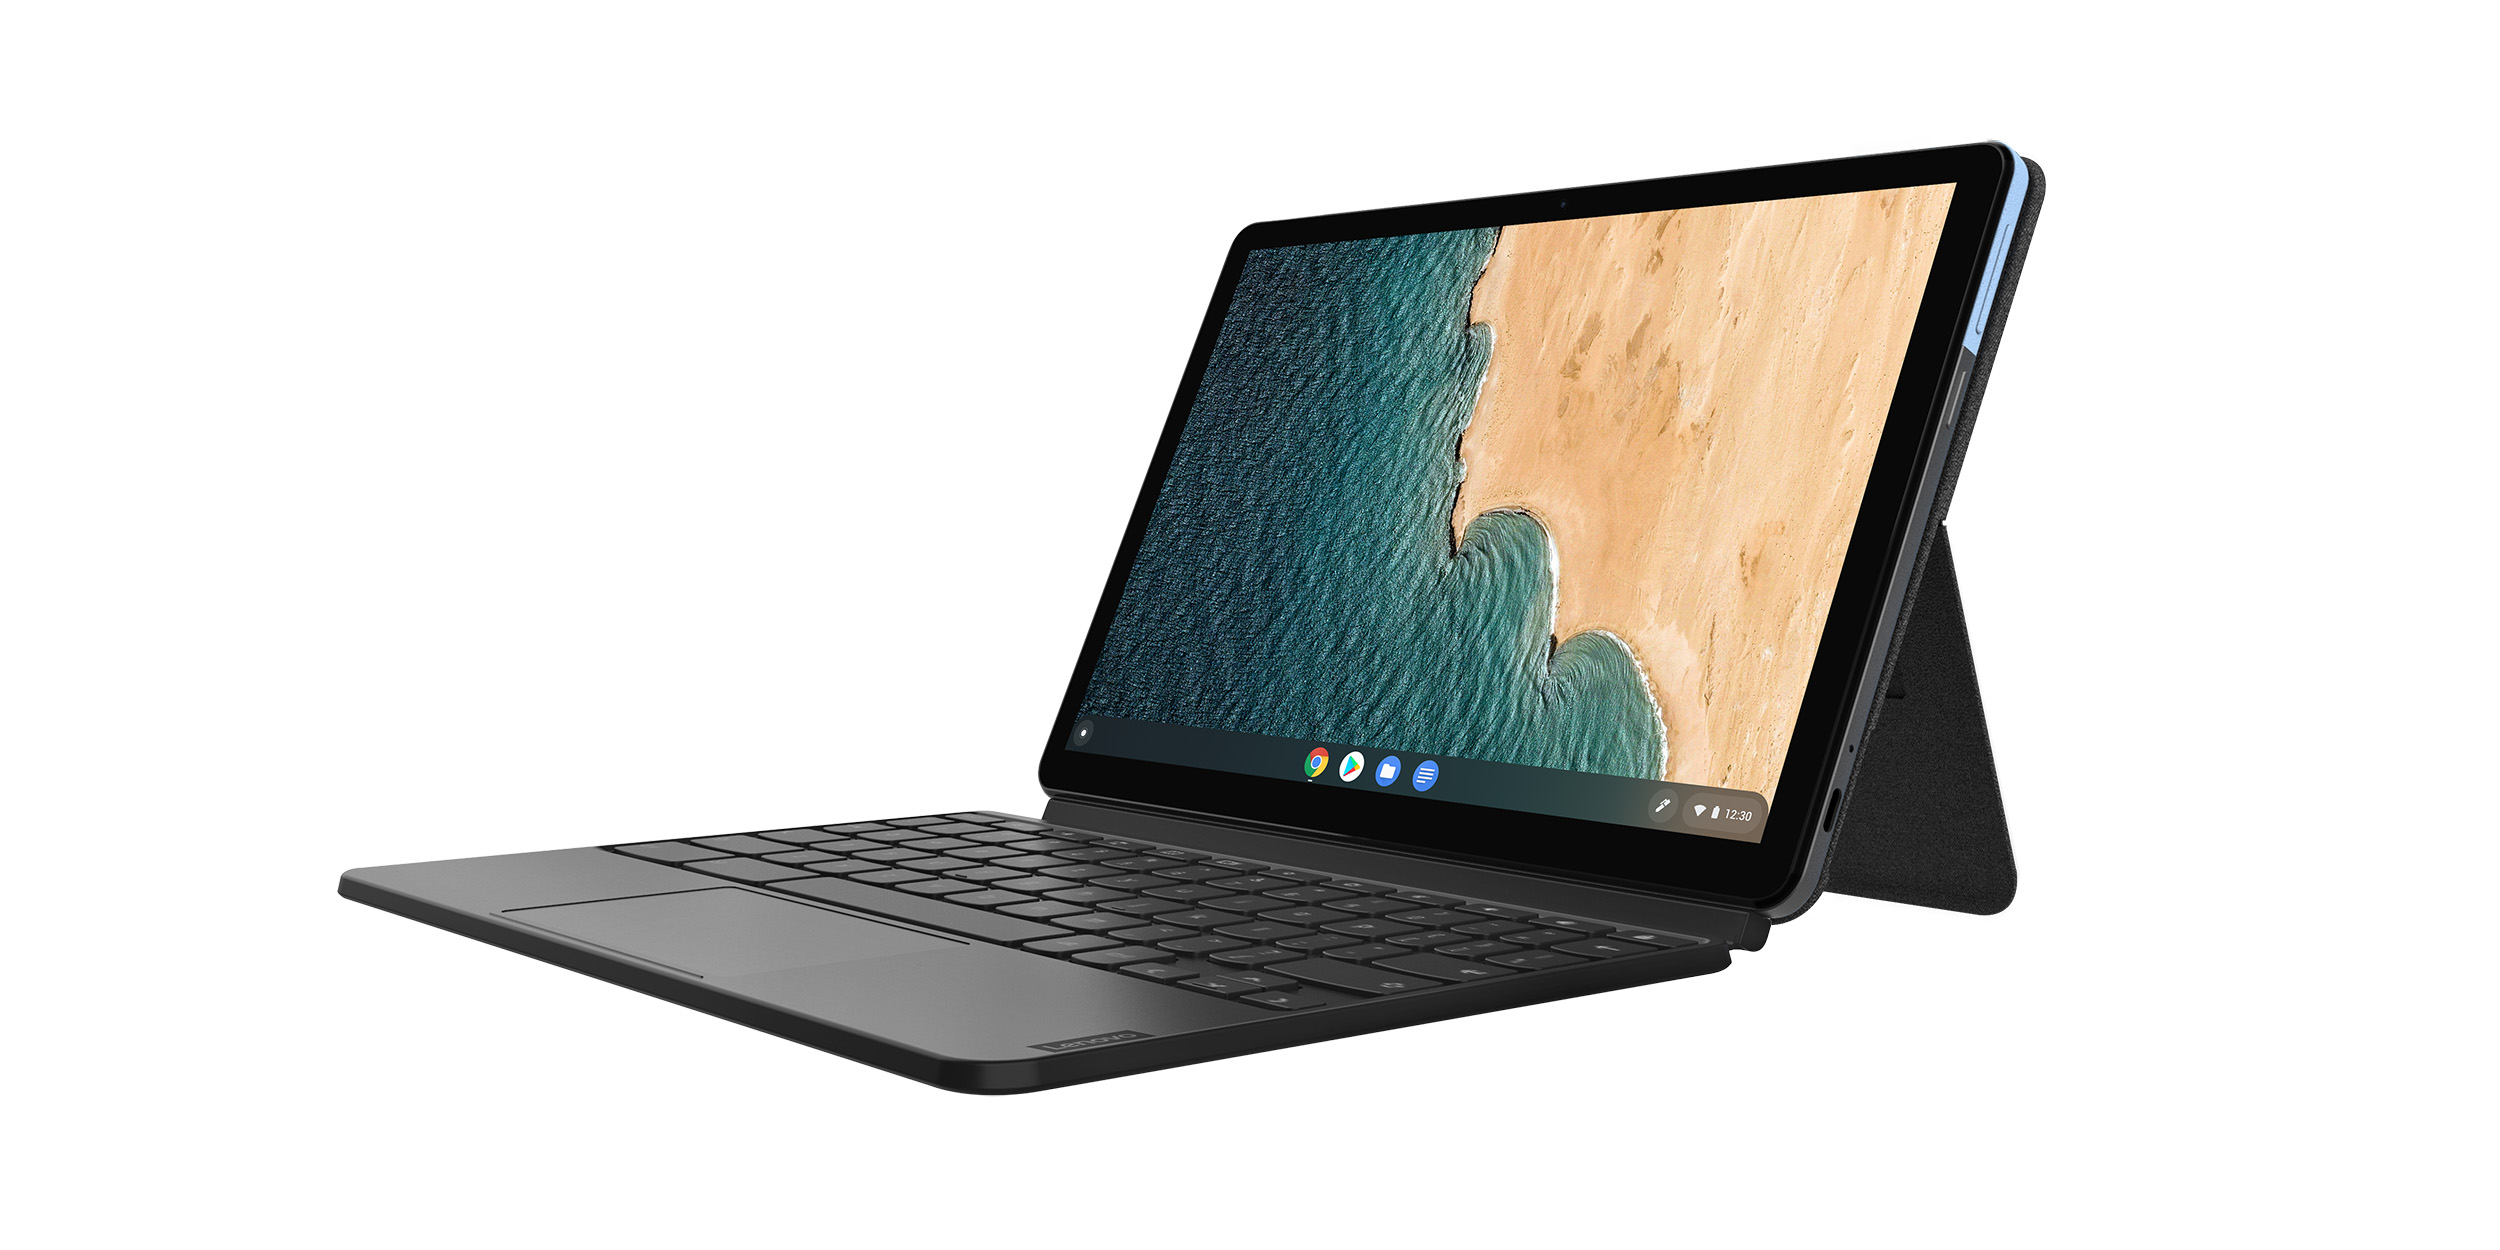 Lenovo unveils the IdeaPad Duet and IdeaPad Flex 5 Chromebooks at 